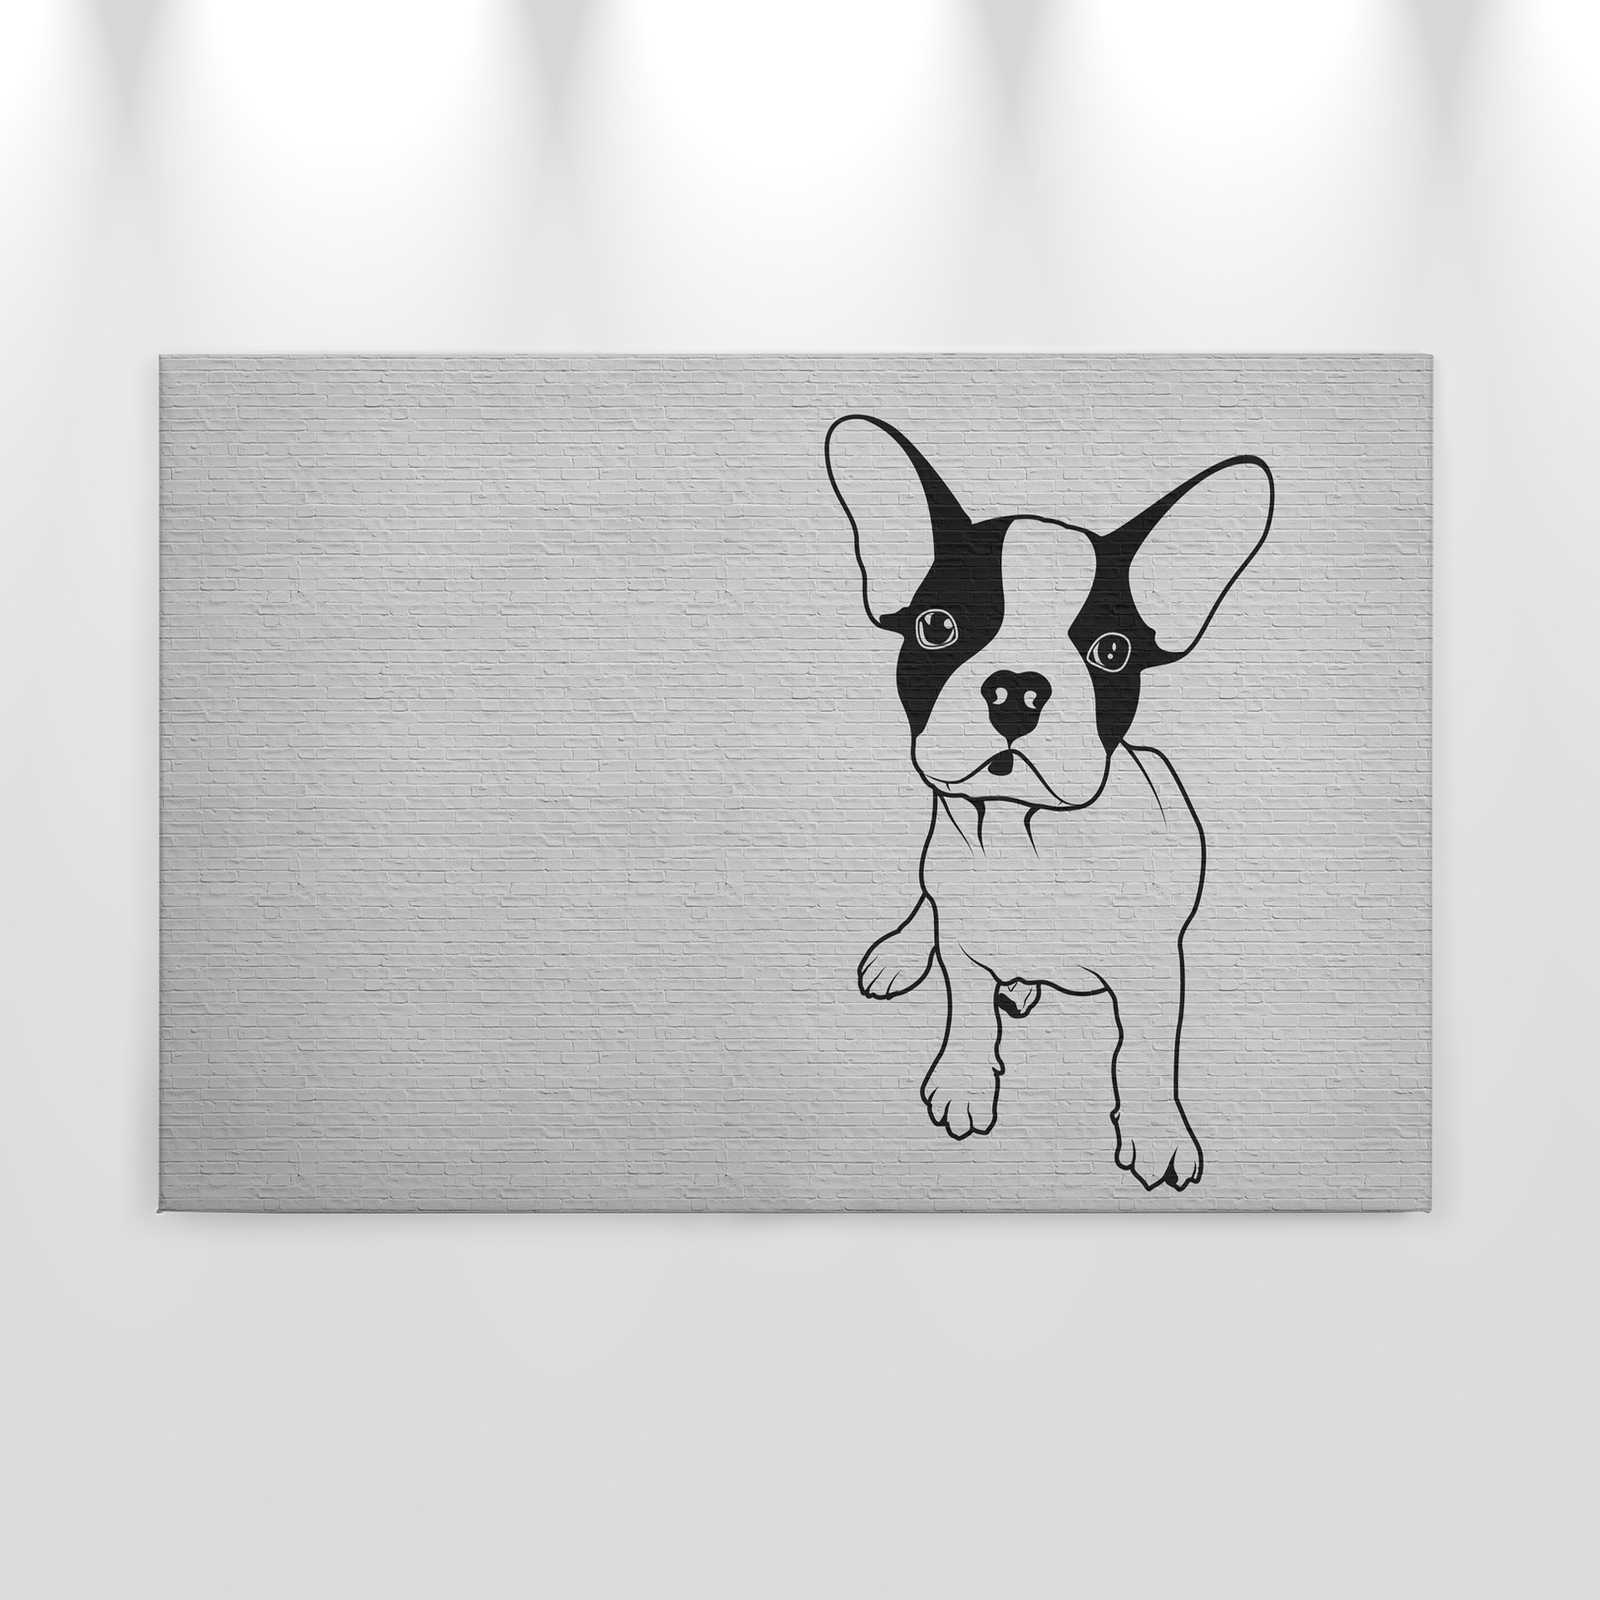             Tattoo you 2 - Canvas schilderij franse bulldog, zwart en wit - 0,90 m x 0,60 m
        